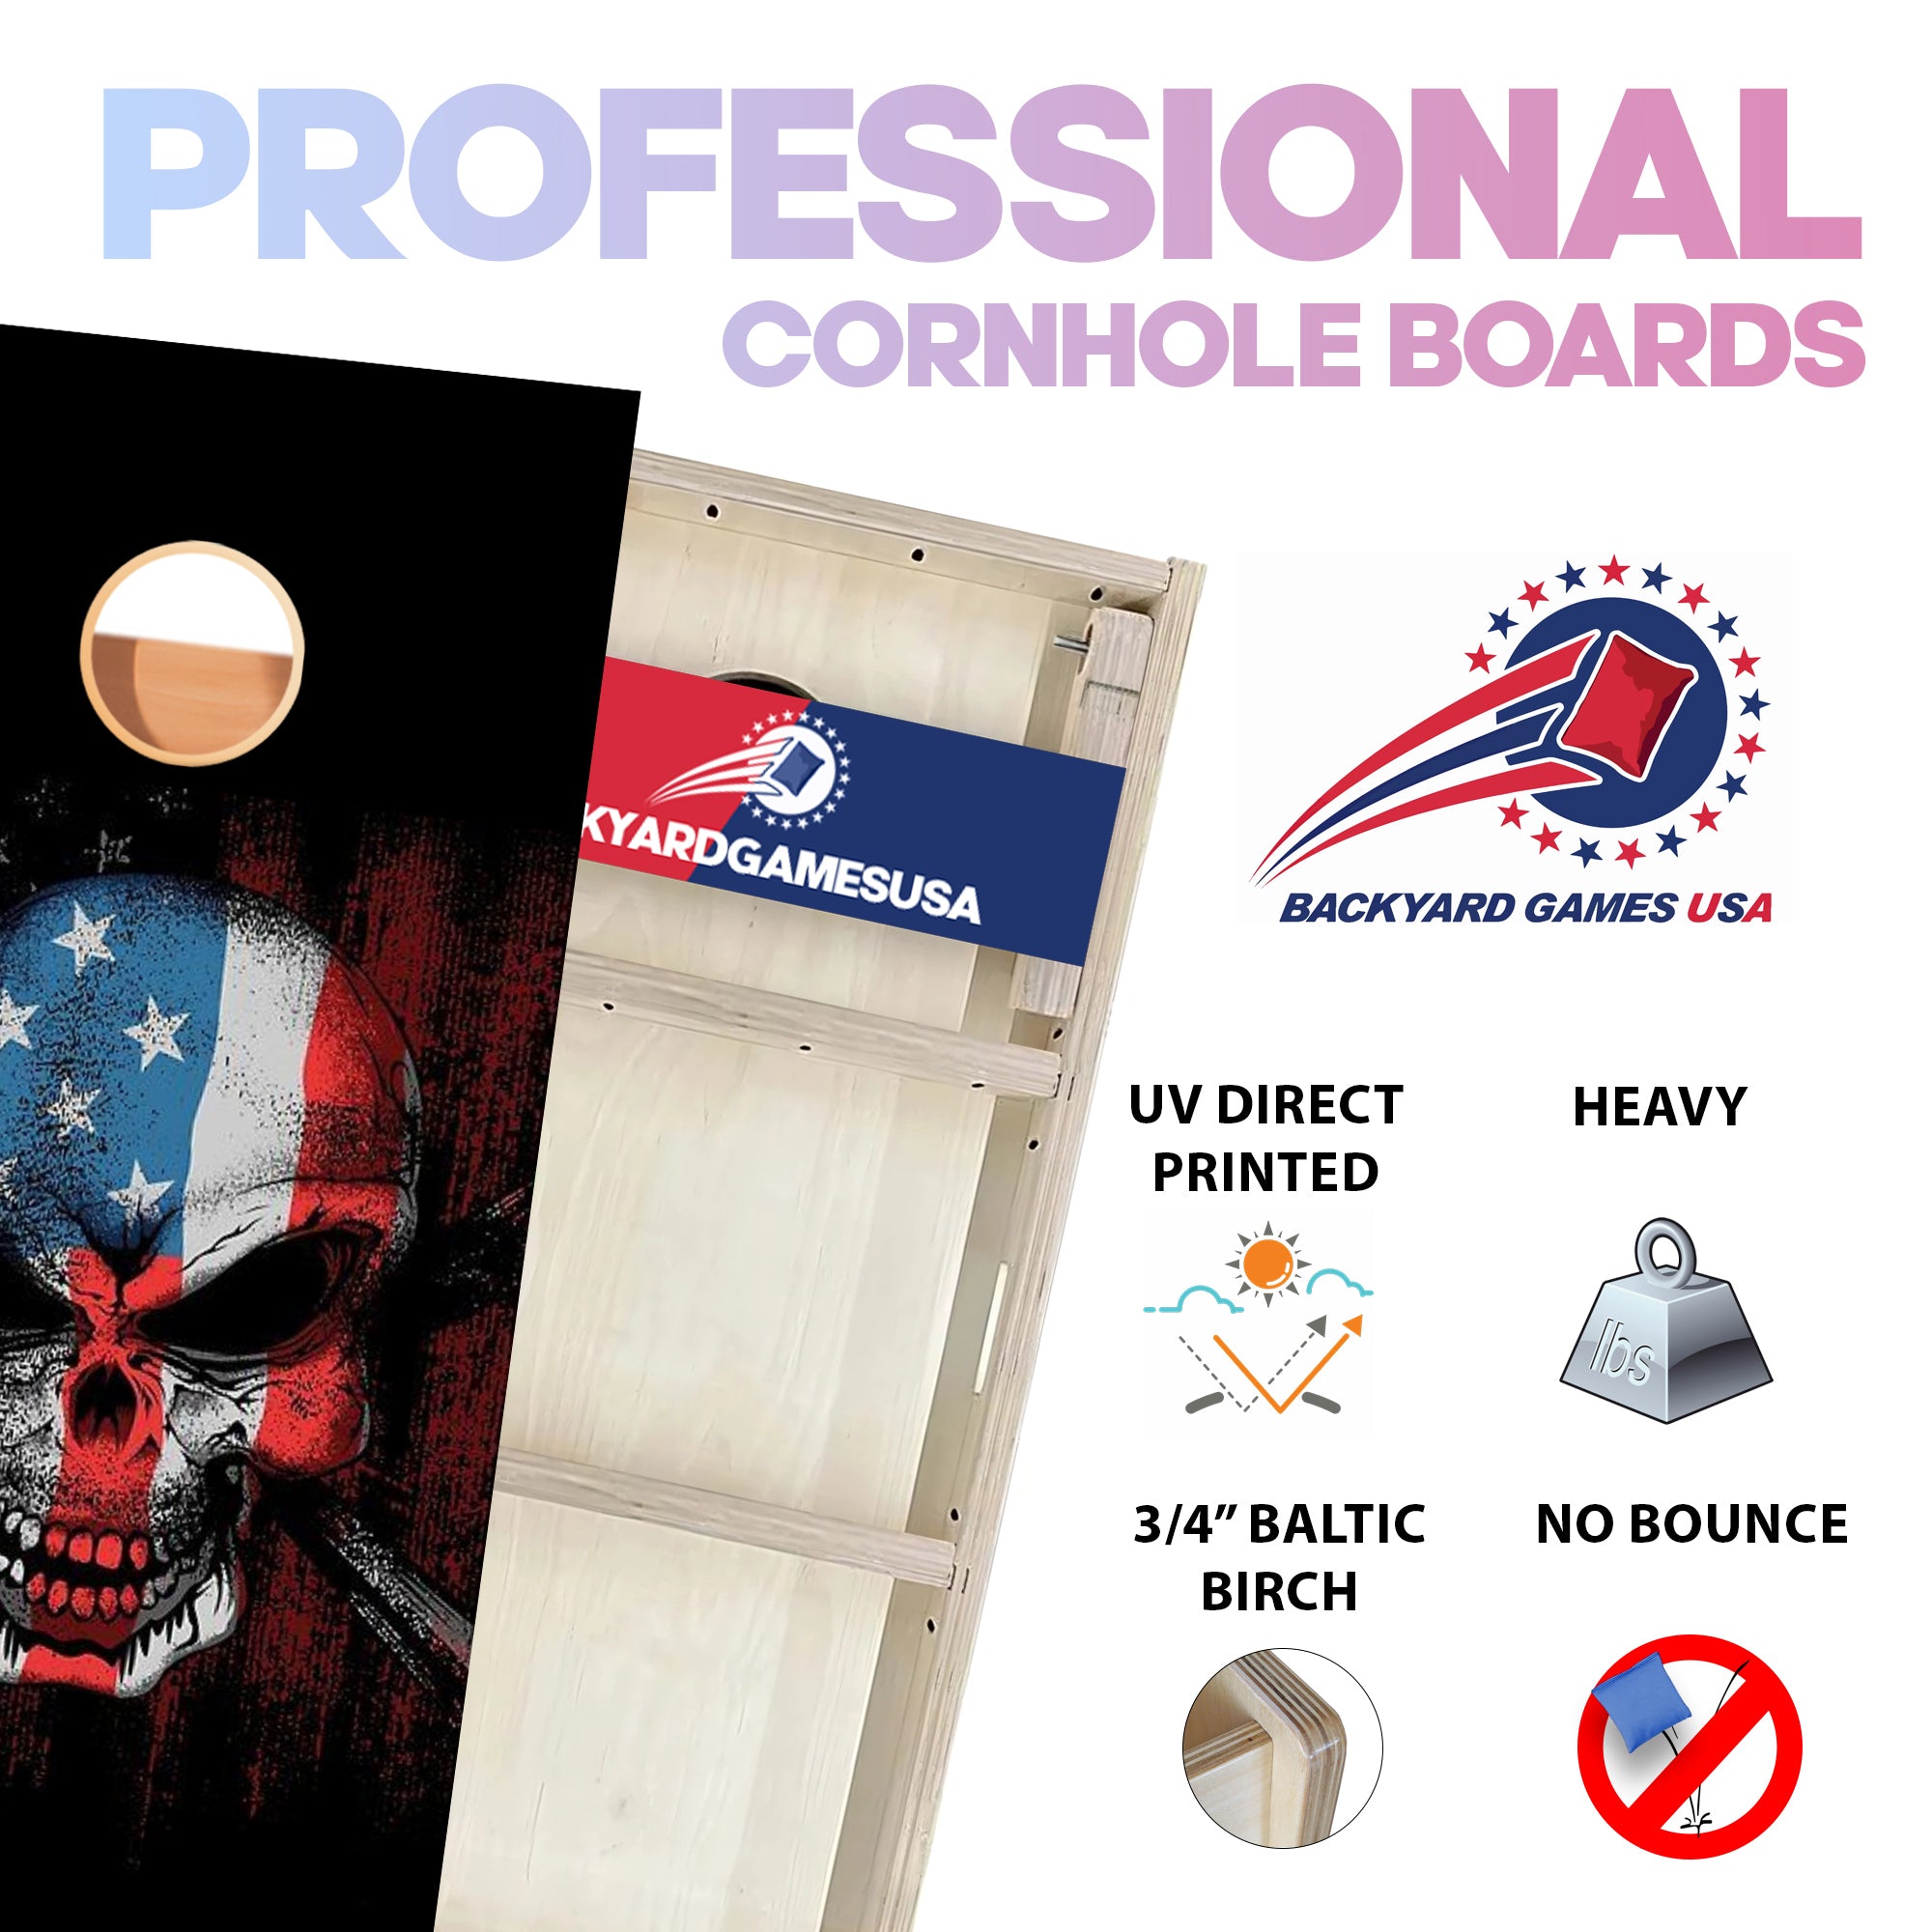 Skull Bones Professional Cornhole Boards